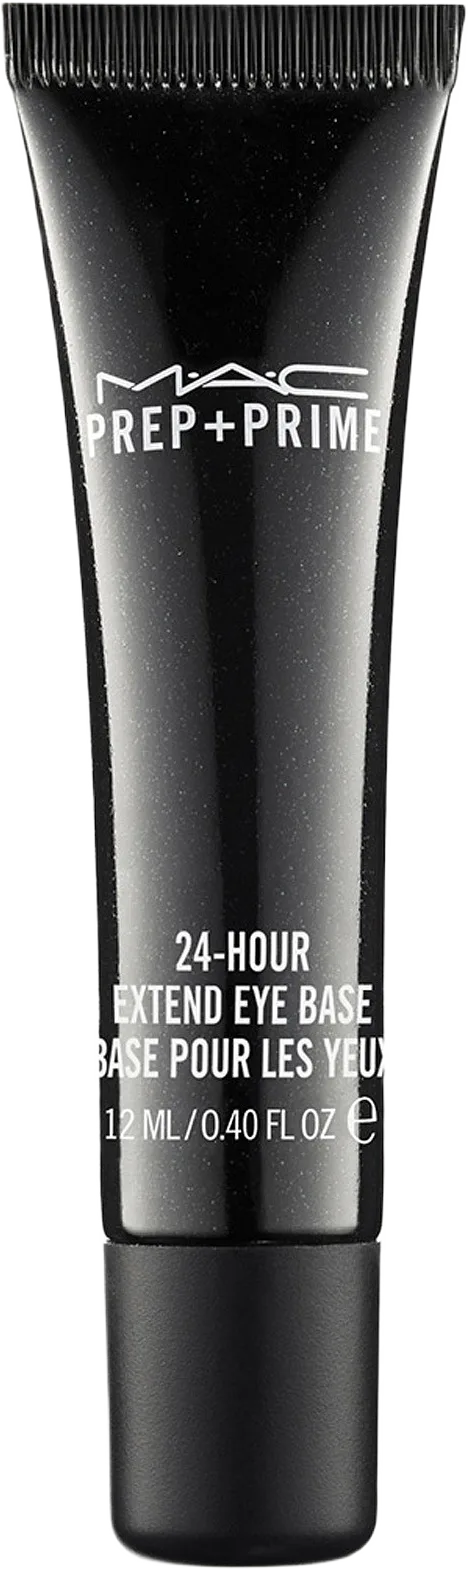 Prep + Prime 24-Hour Extend Eye Base